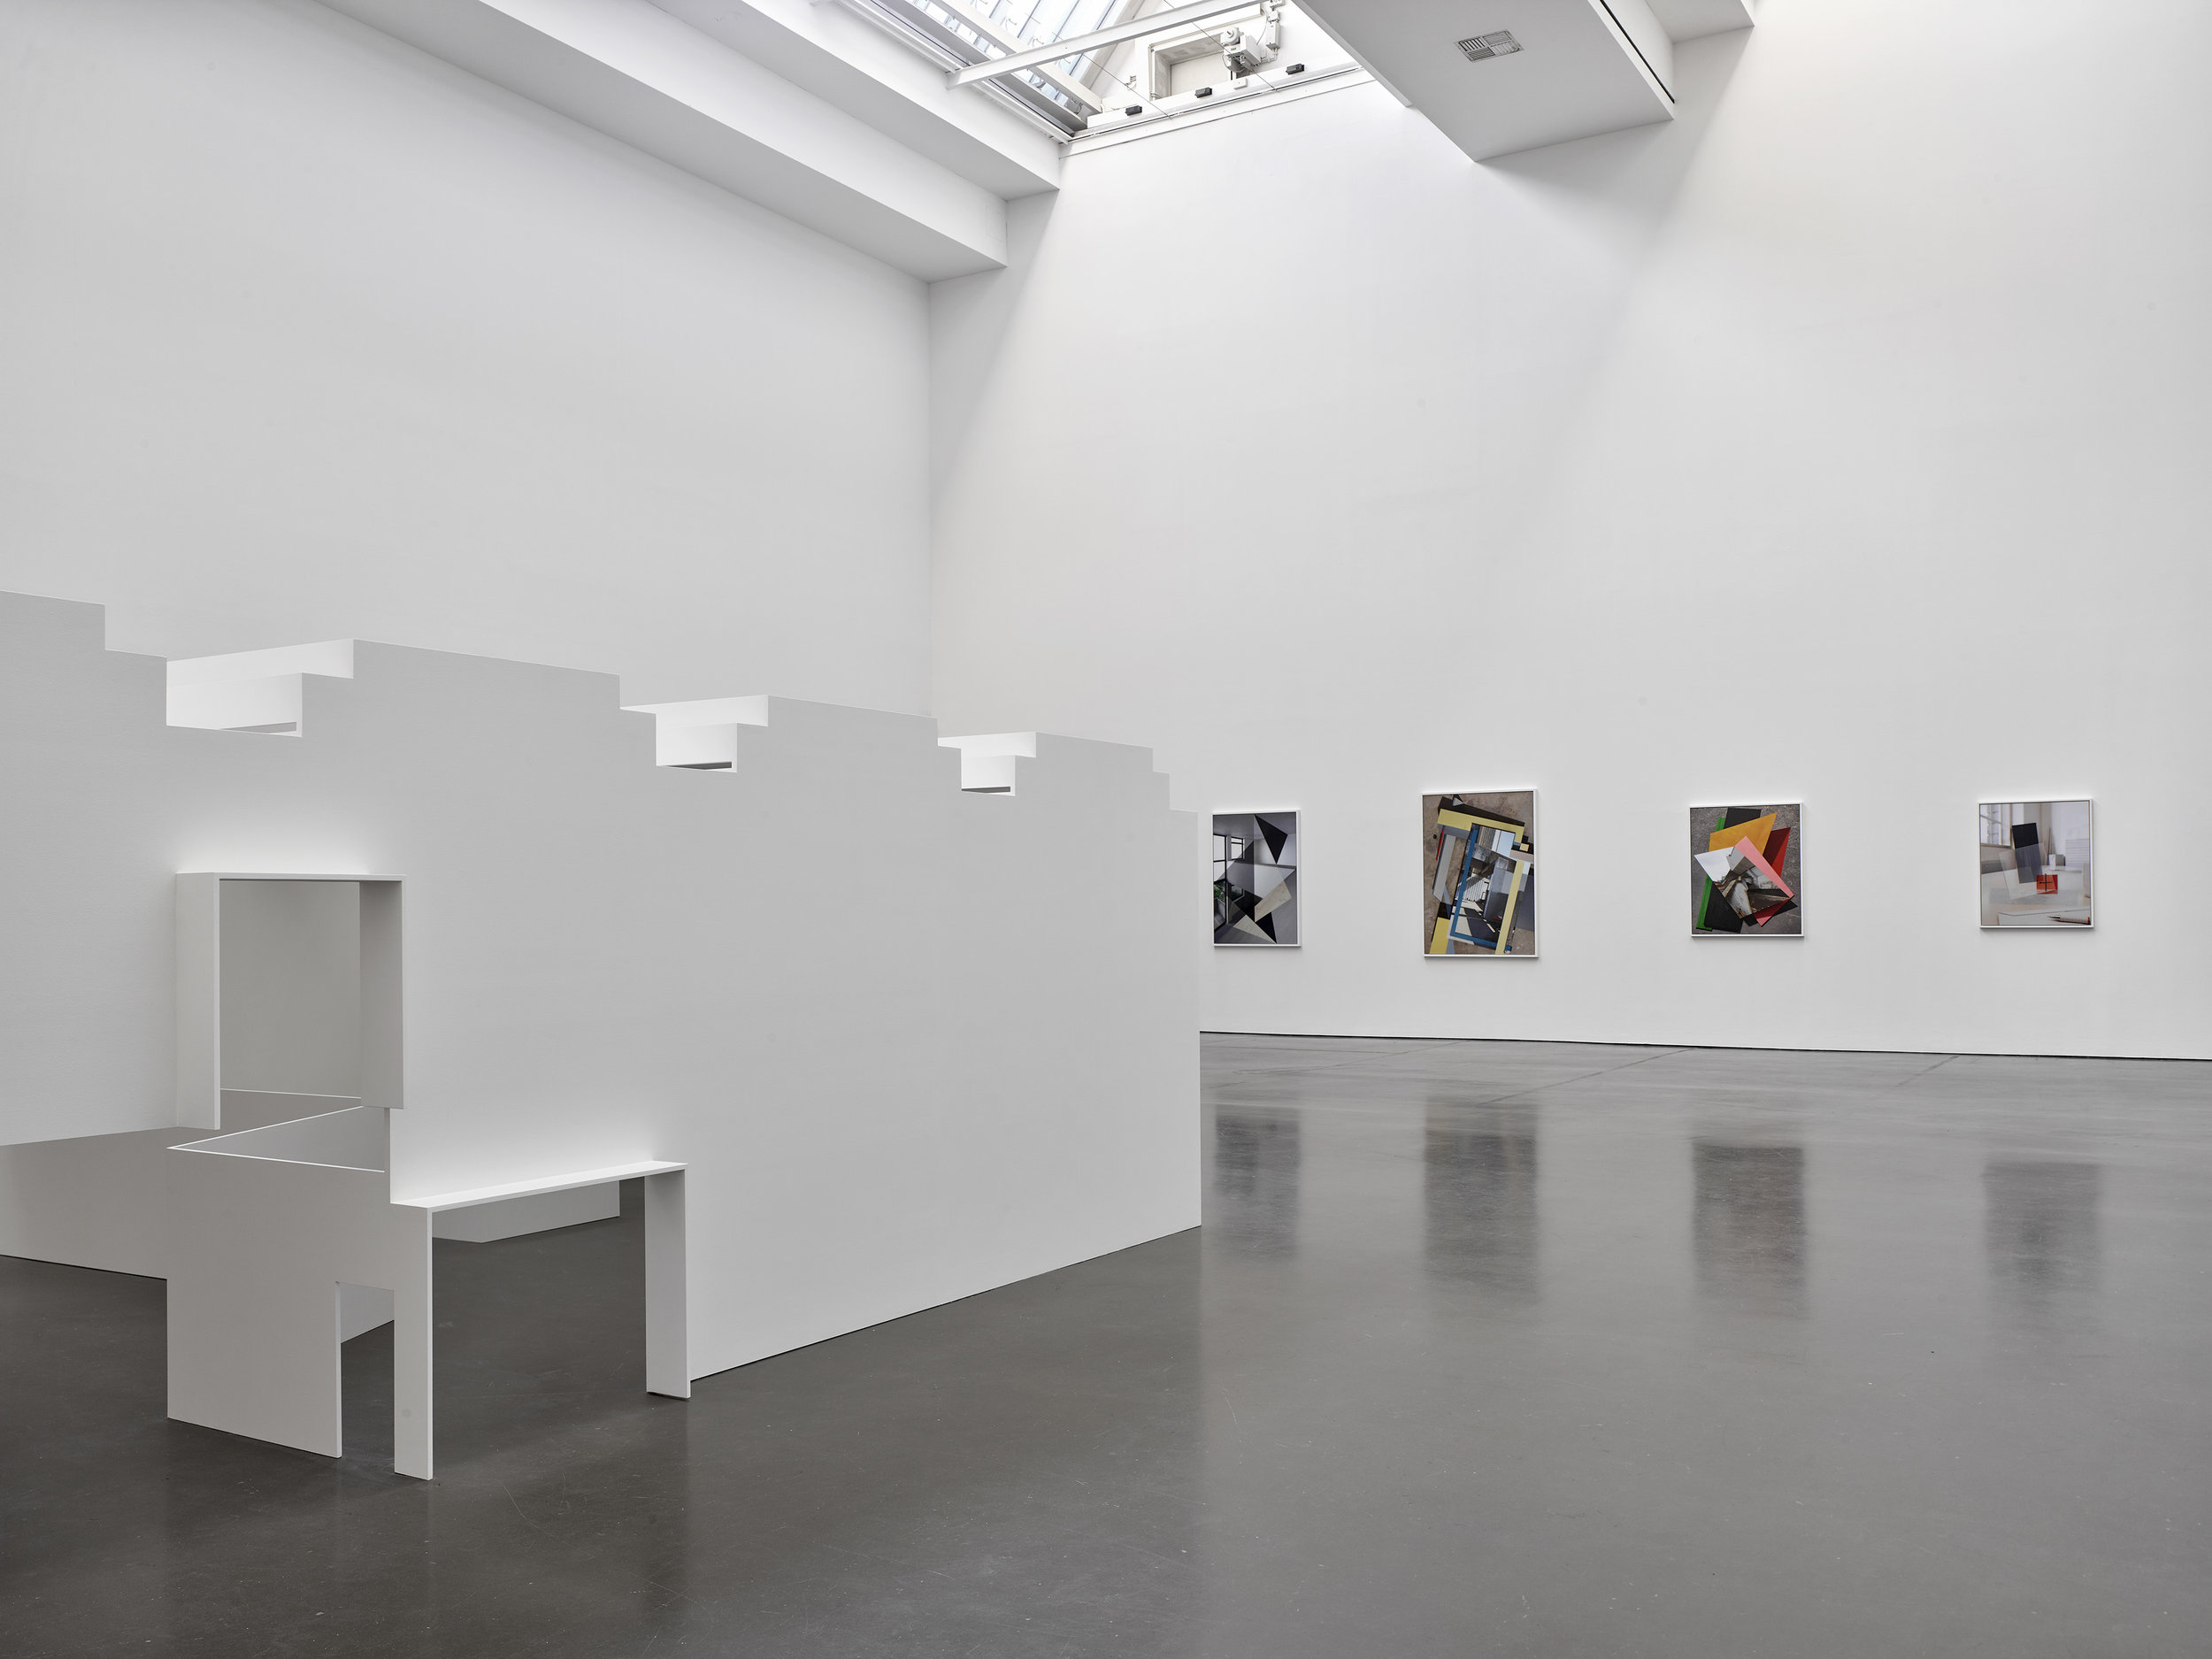  replica, 2019, installation view Kunsthalle Düsseldorf, Photo: Achim Kukulies 